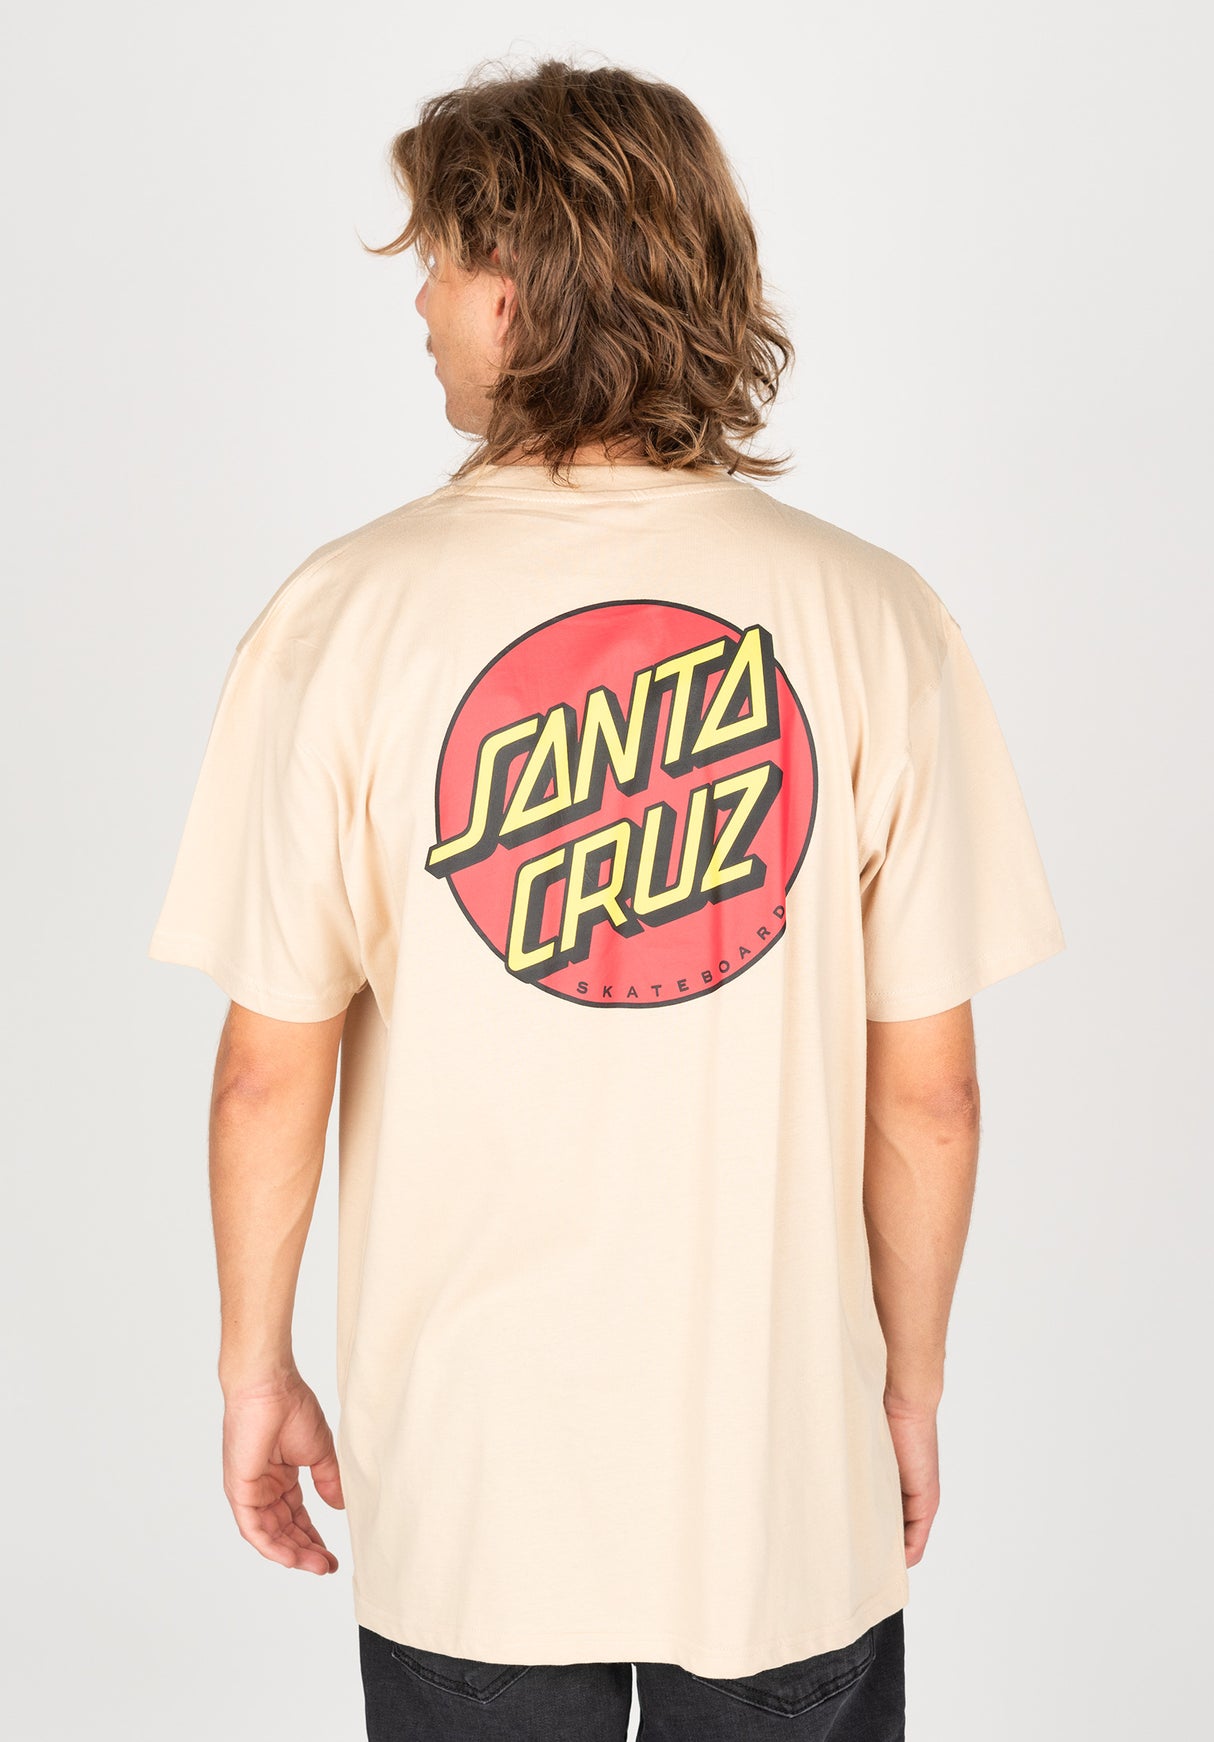 oat – for in Men Dot T-Shirt Classic Santa-Cruz TITUS Chest